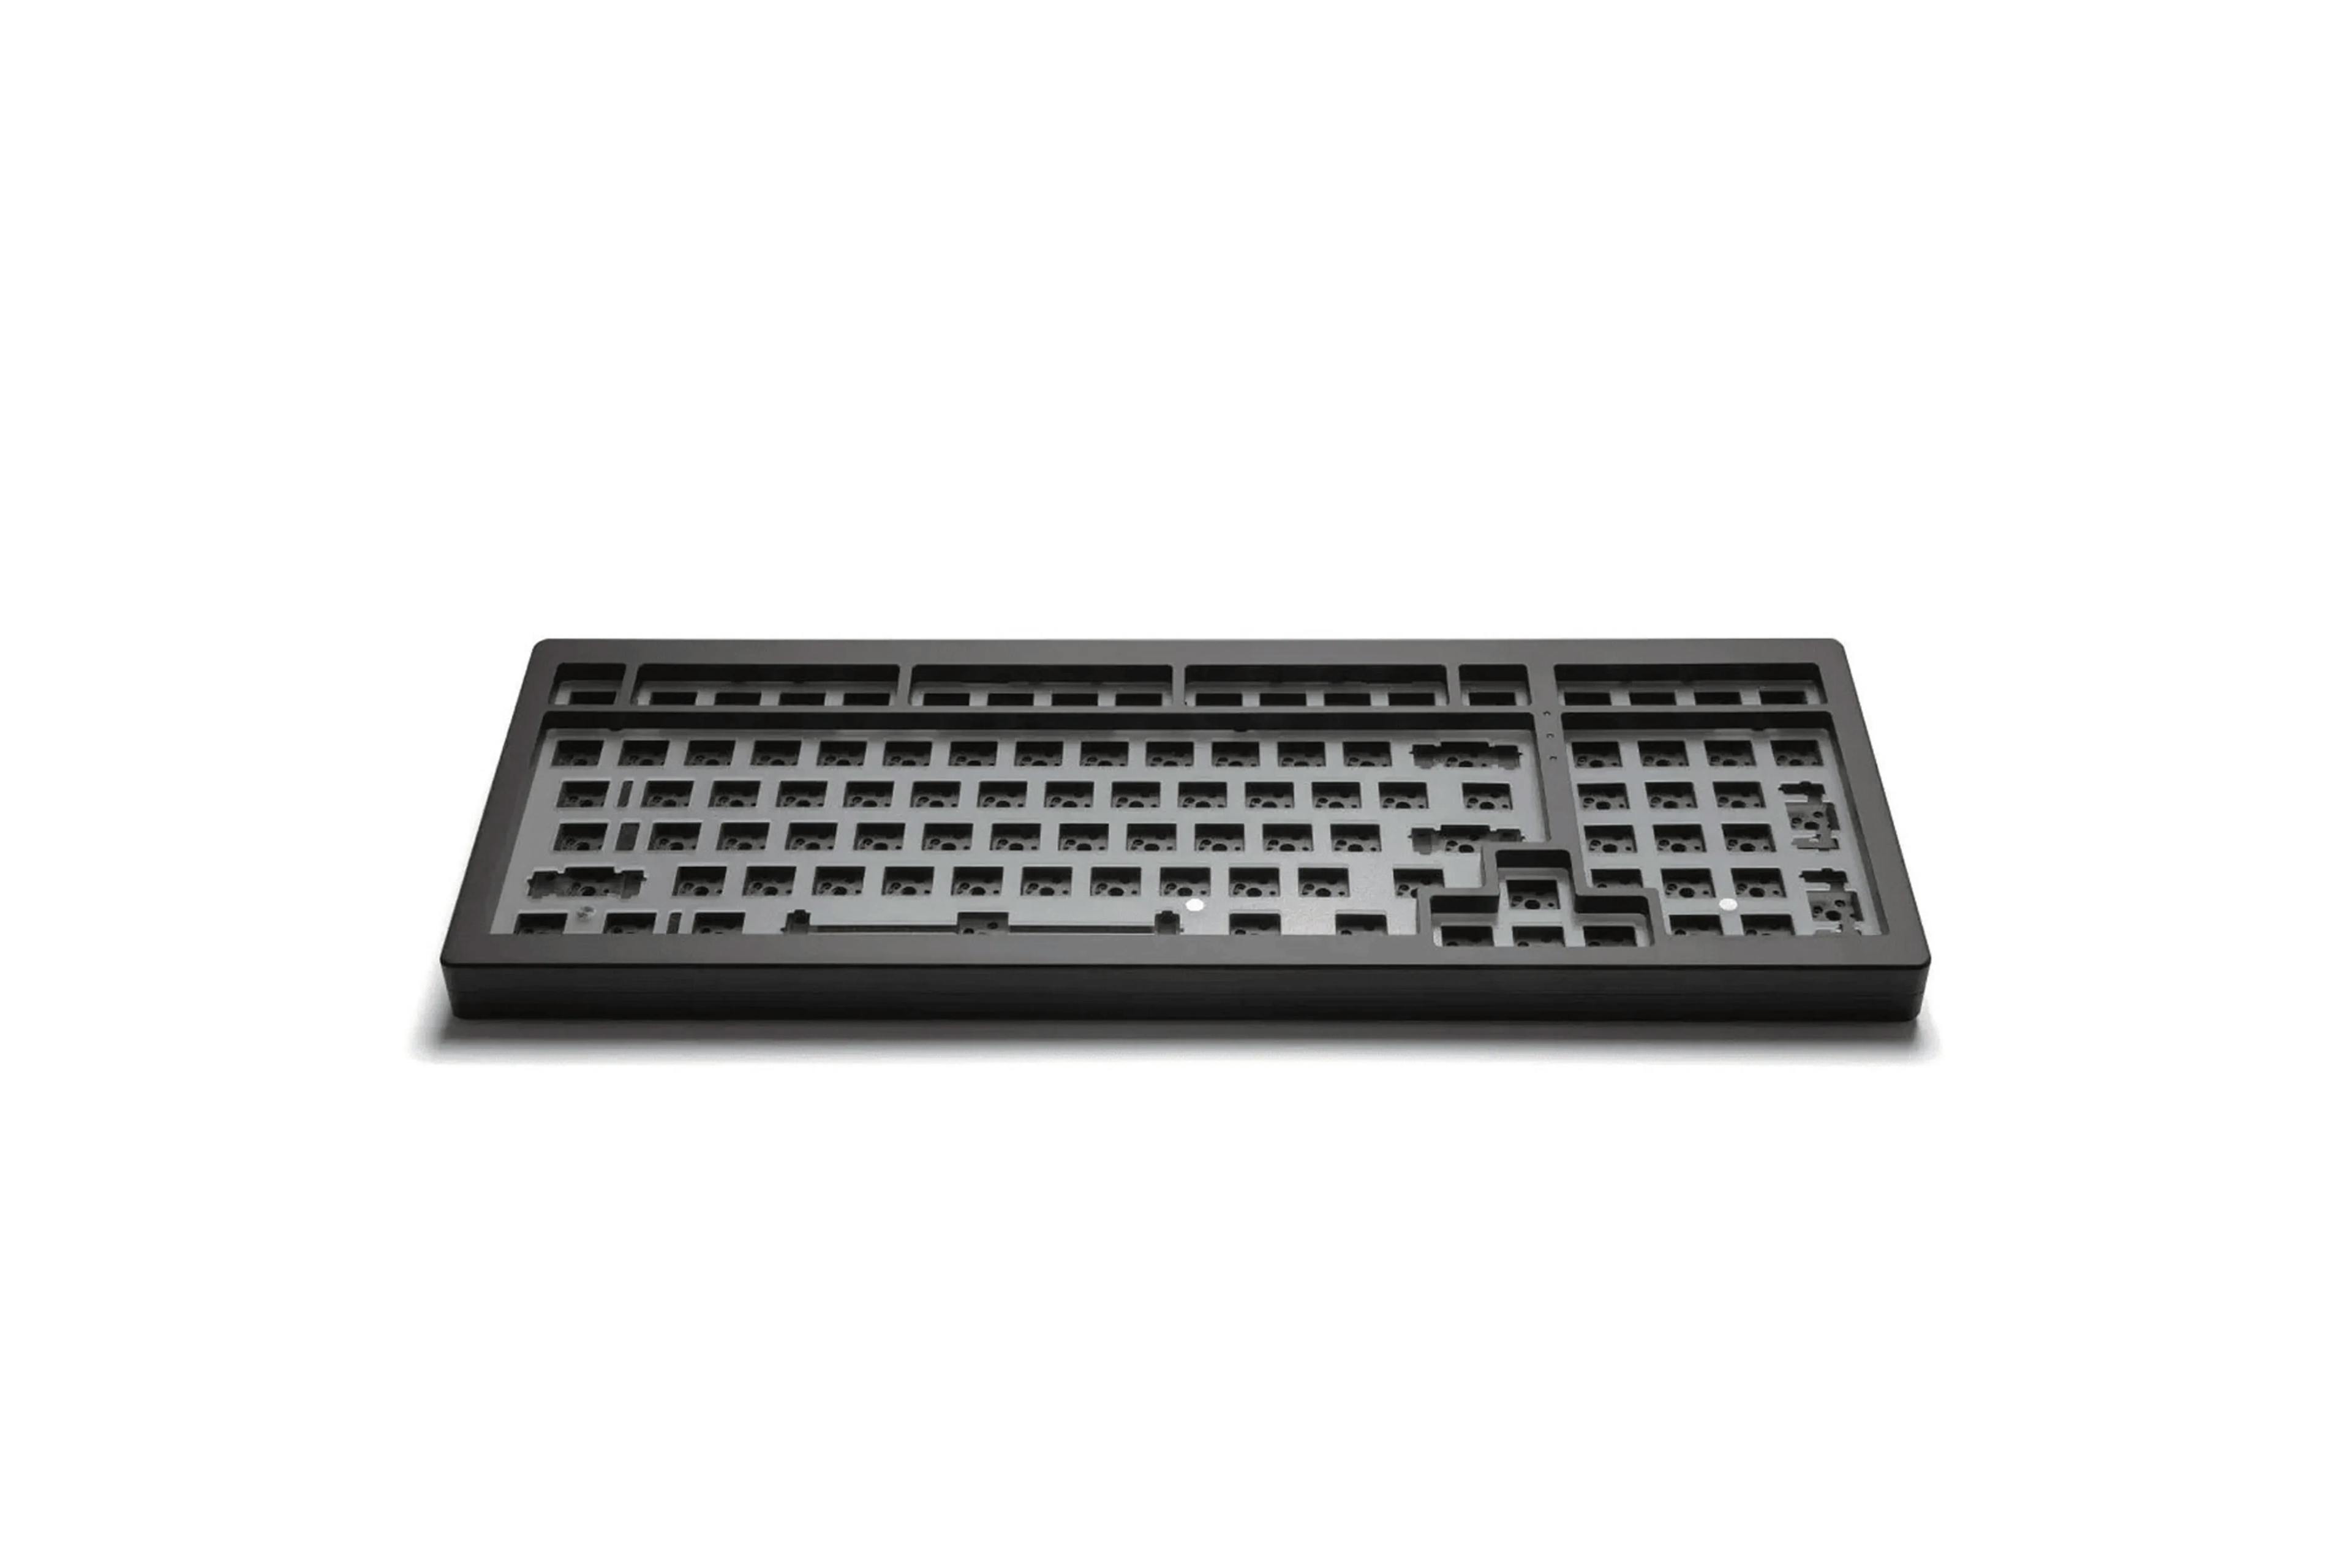 Image for Monsgeek M2 1800 - Barebones Keyboard Kit